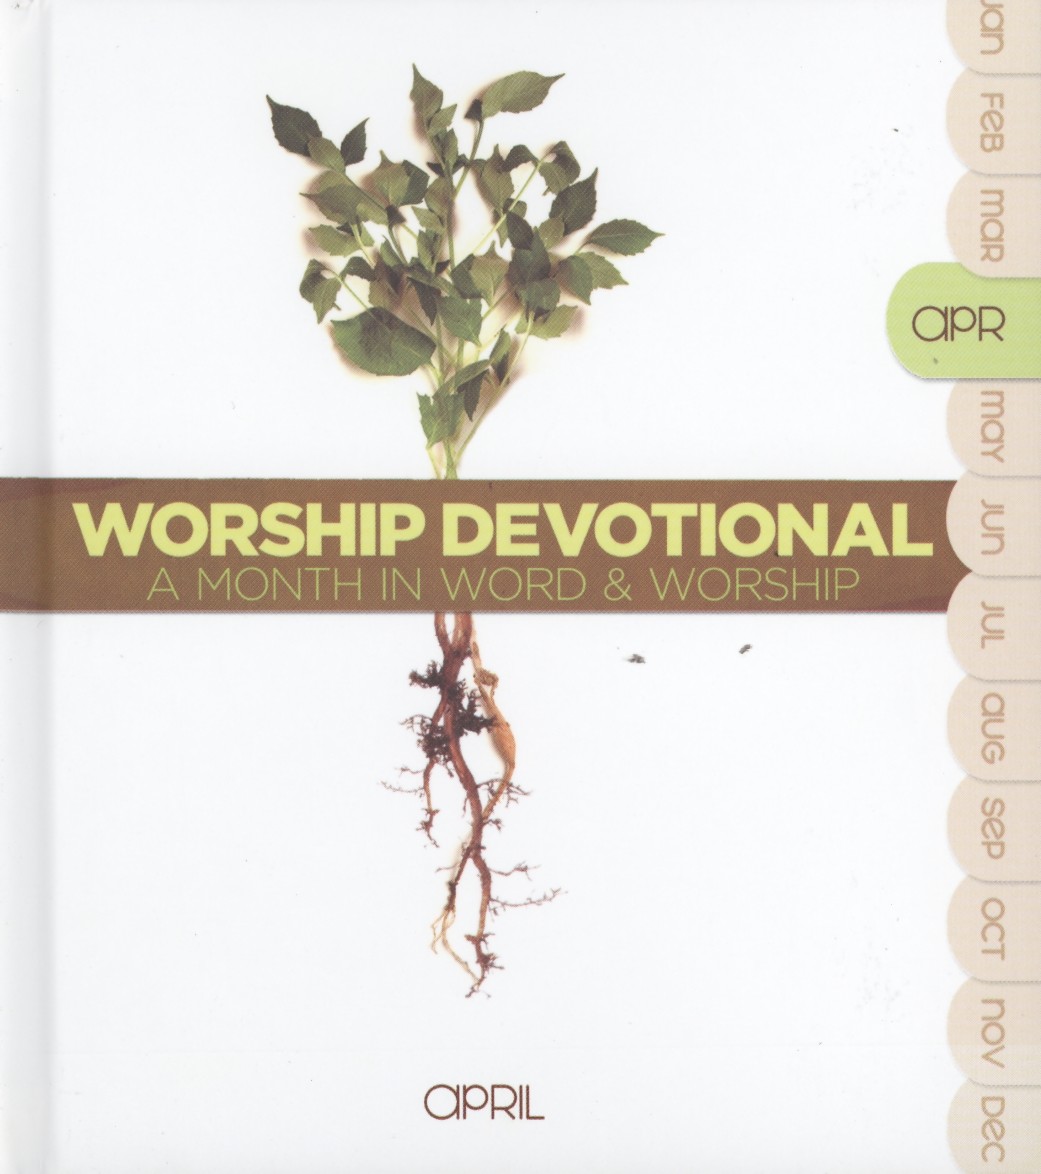 Worship devotional - april